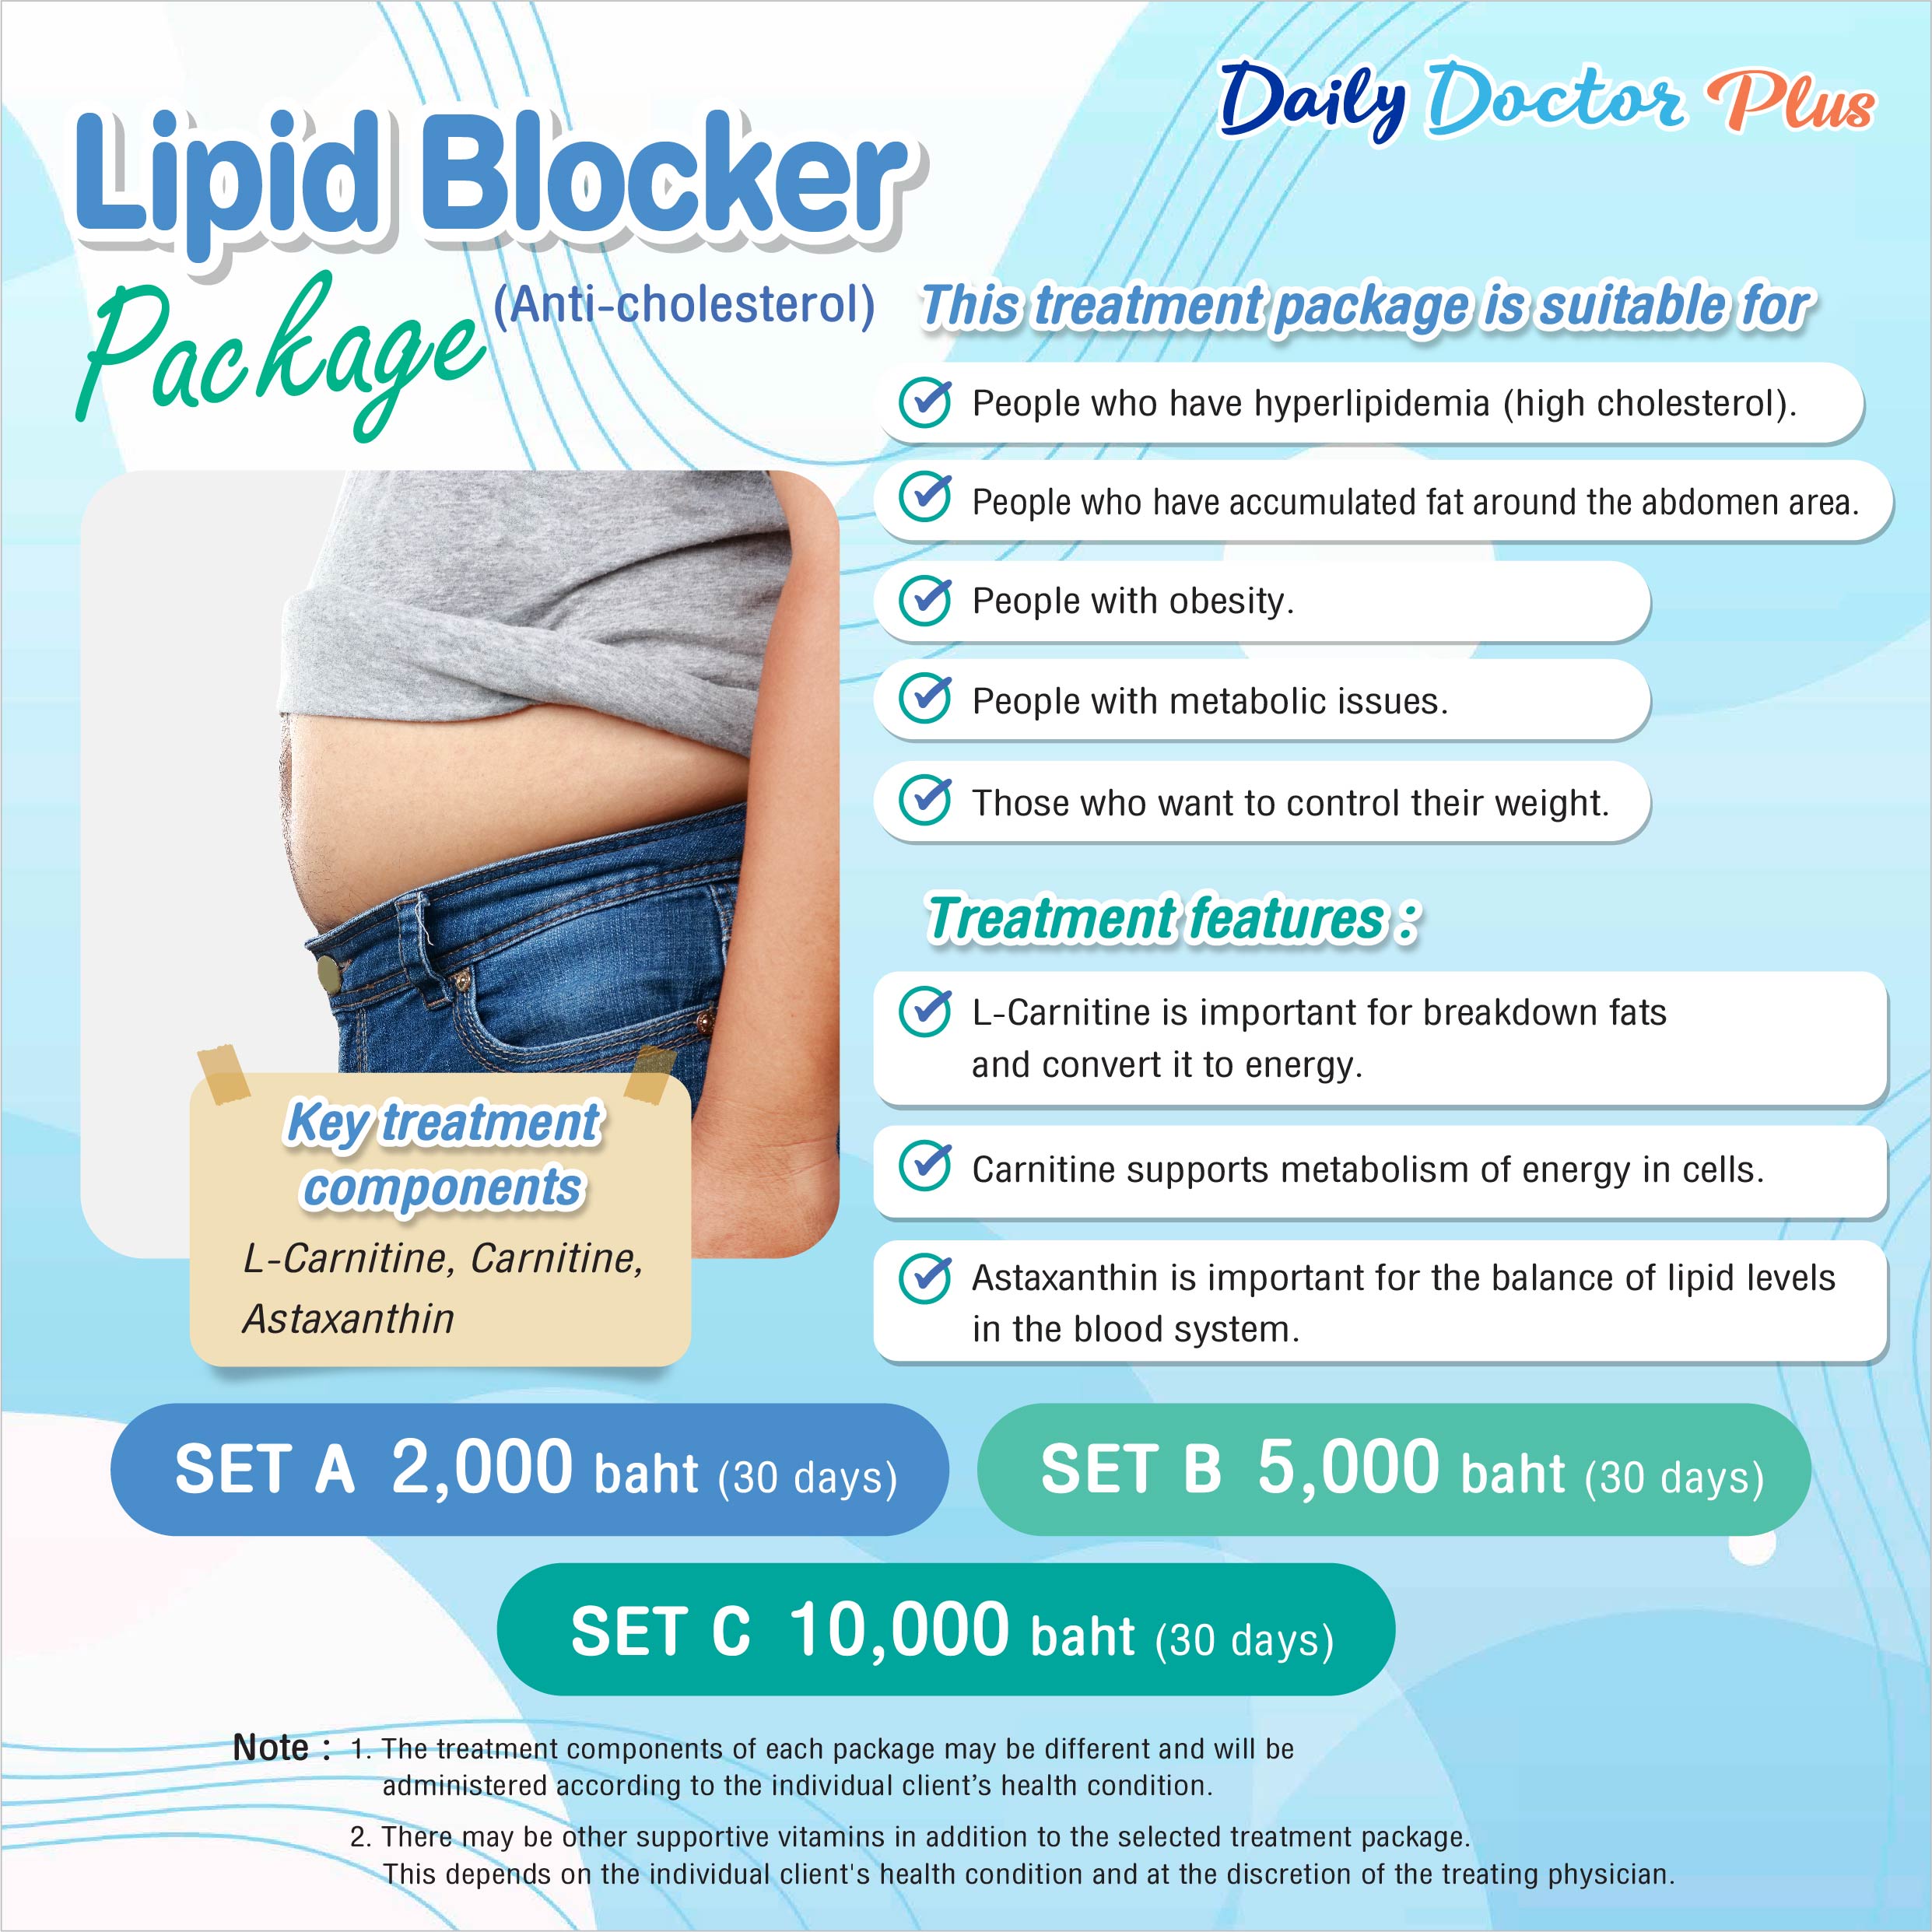 Daily Doctor Plus : Lipid Blocker Package 